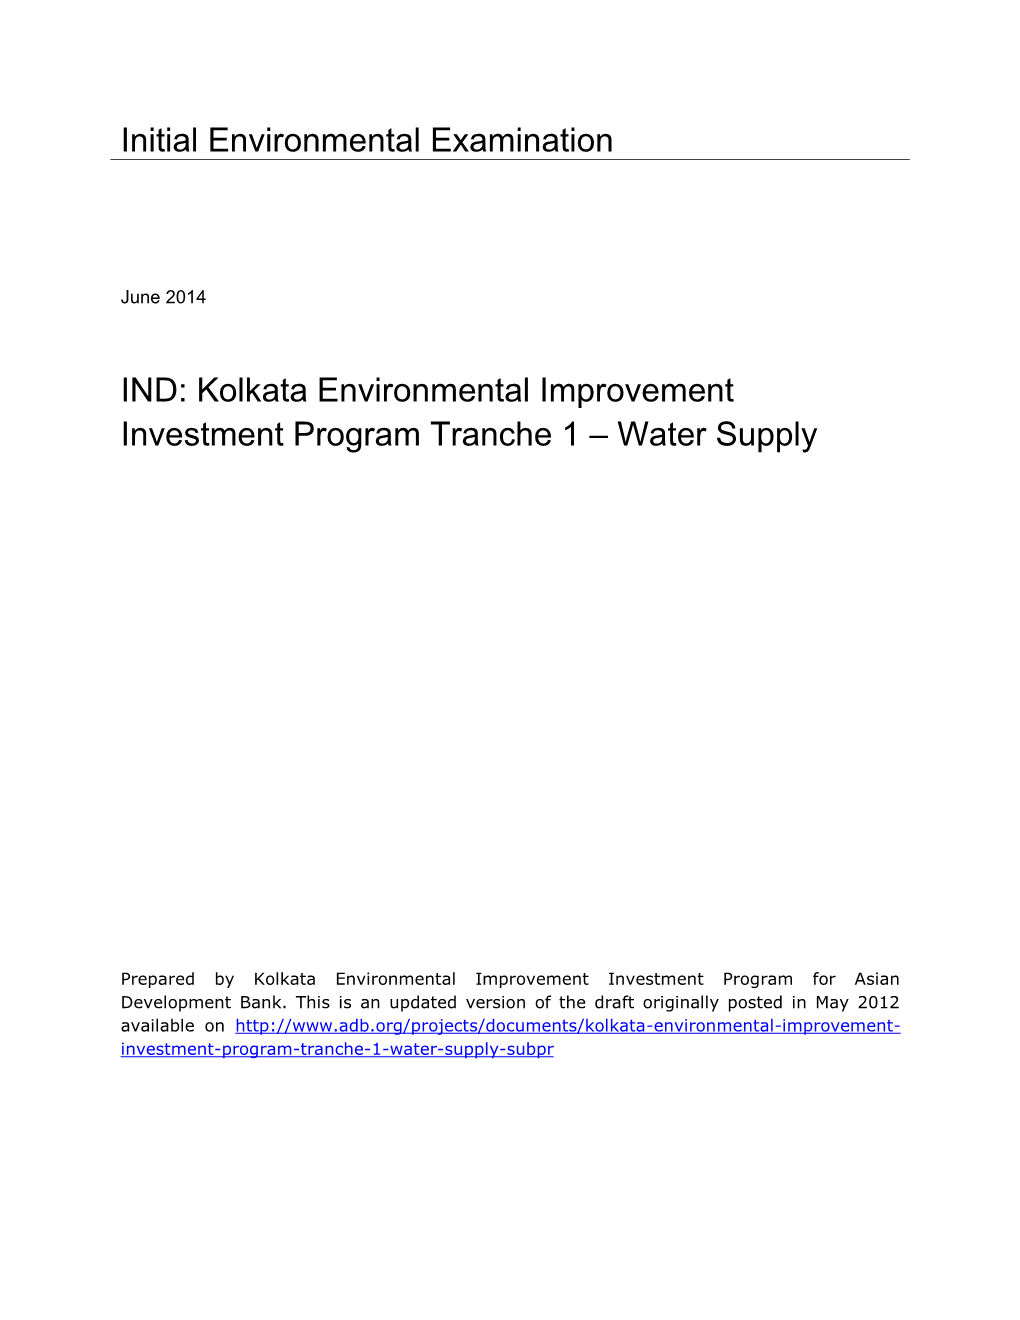 Kolkata Environmental Improvement Investment Program Tranche 1 – Water Supply